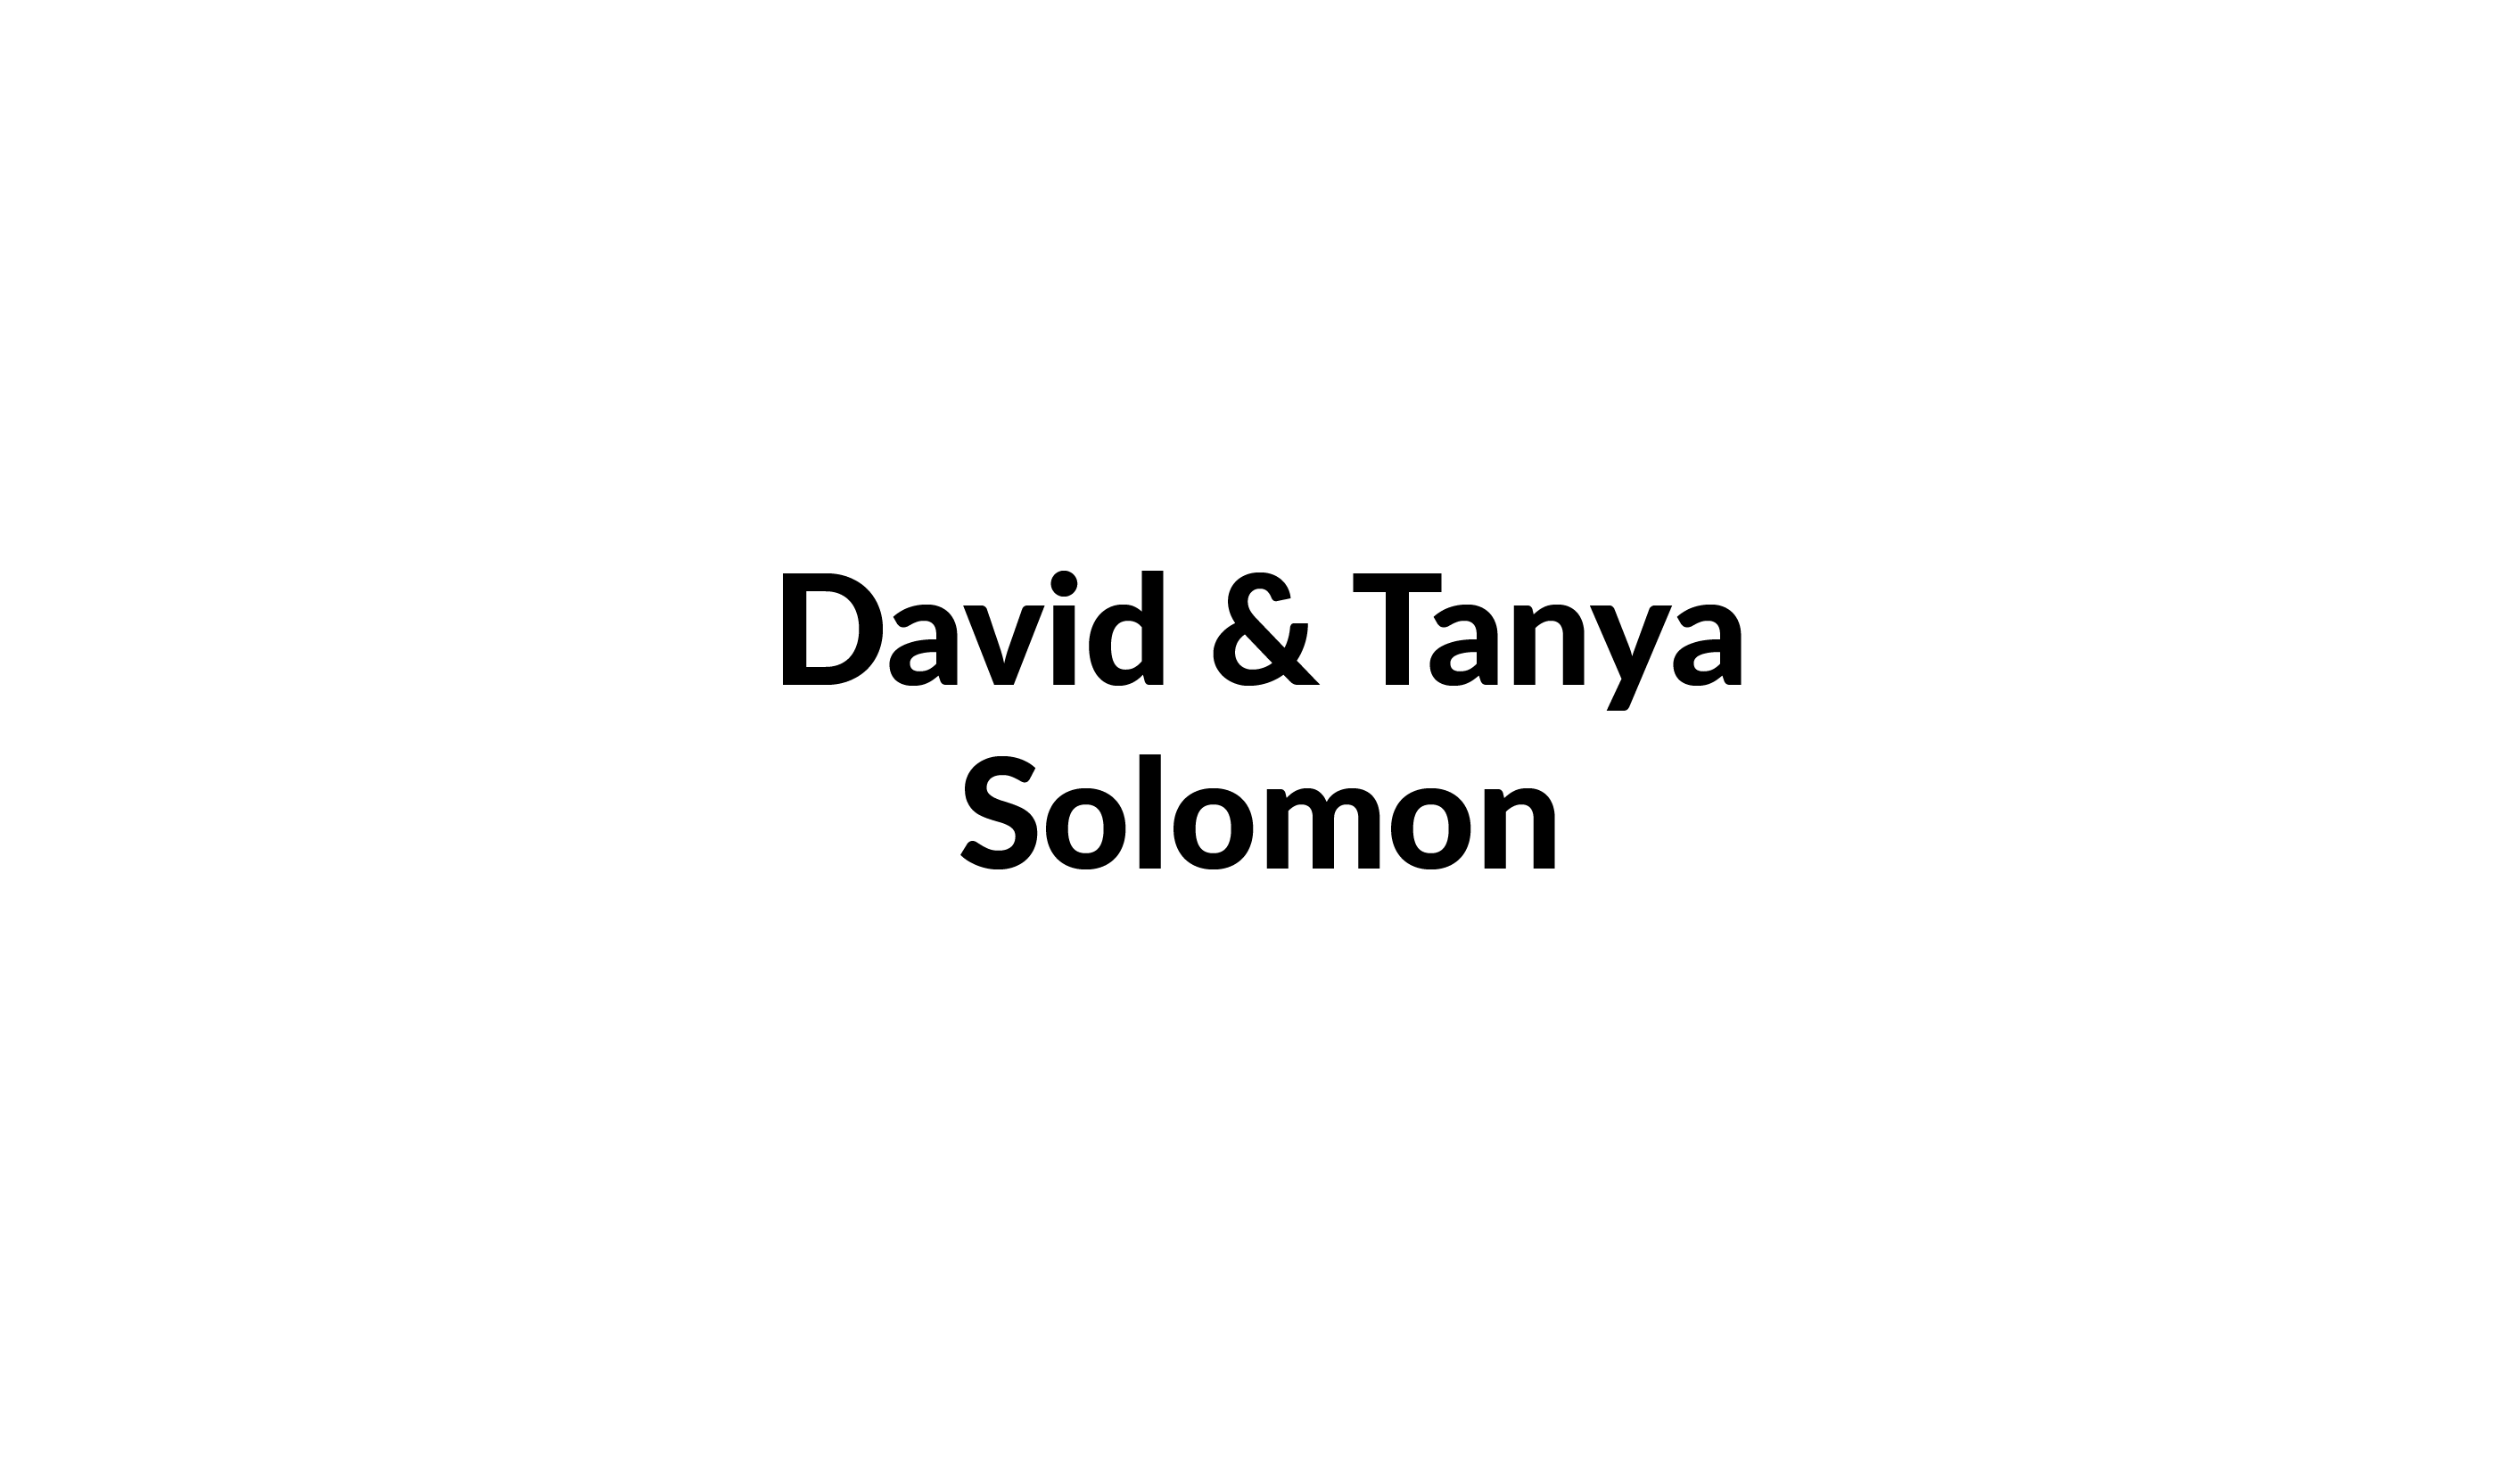 David and Tanya Solomon